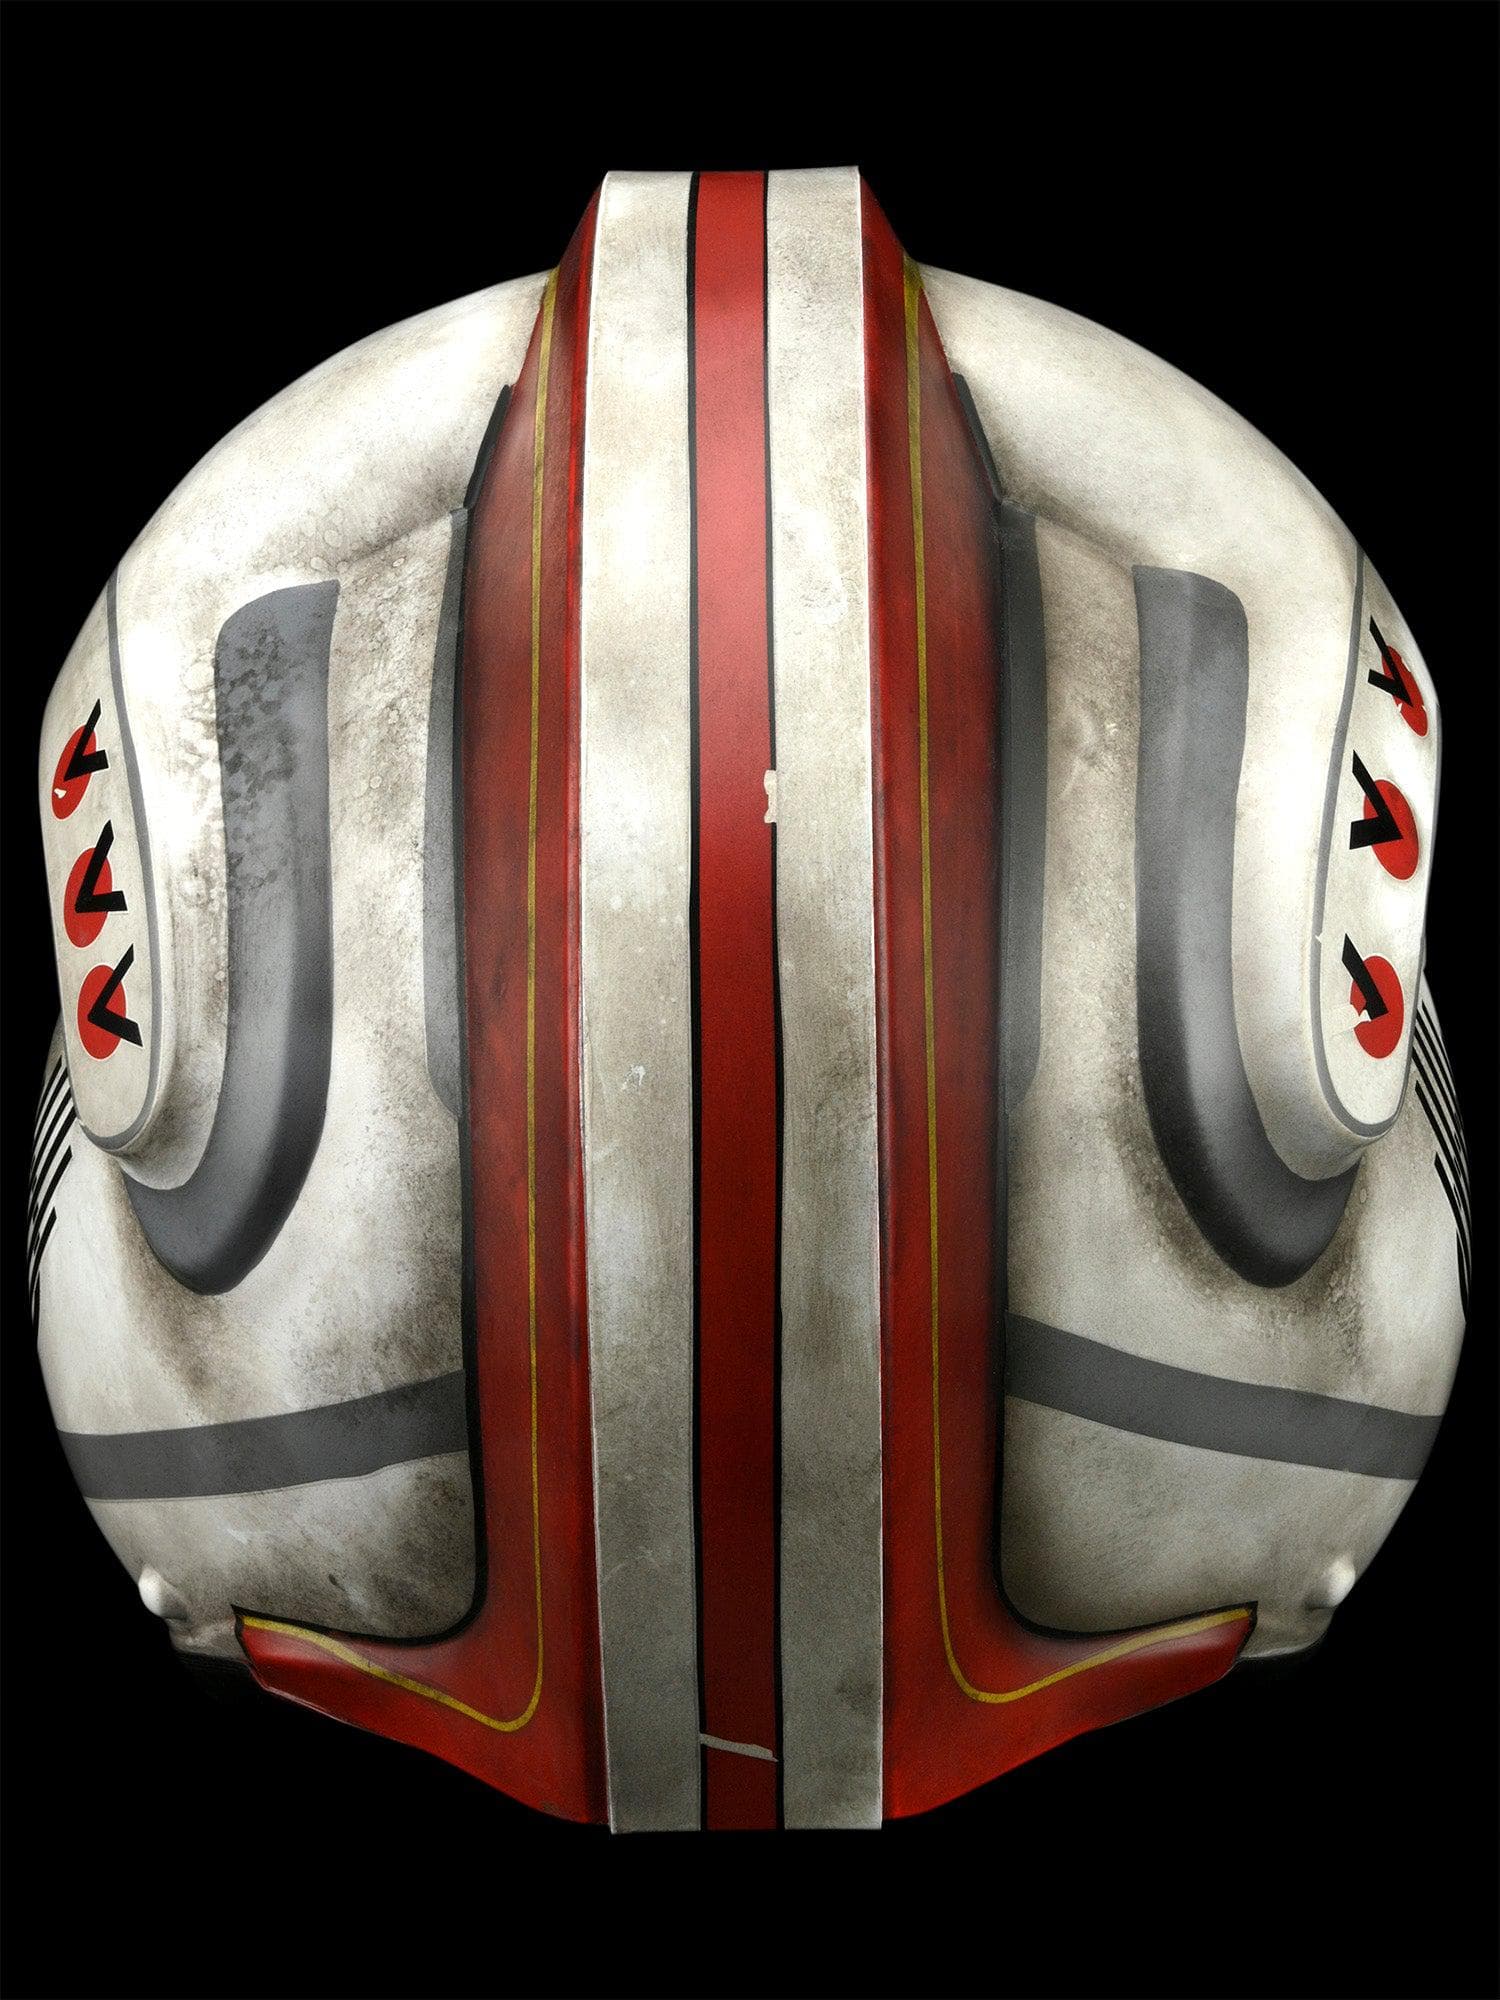 Denuo Novo Star Wars Luke Skywalker X-wing Helmet Accessory - costumes.com